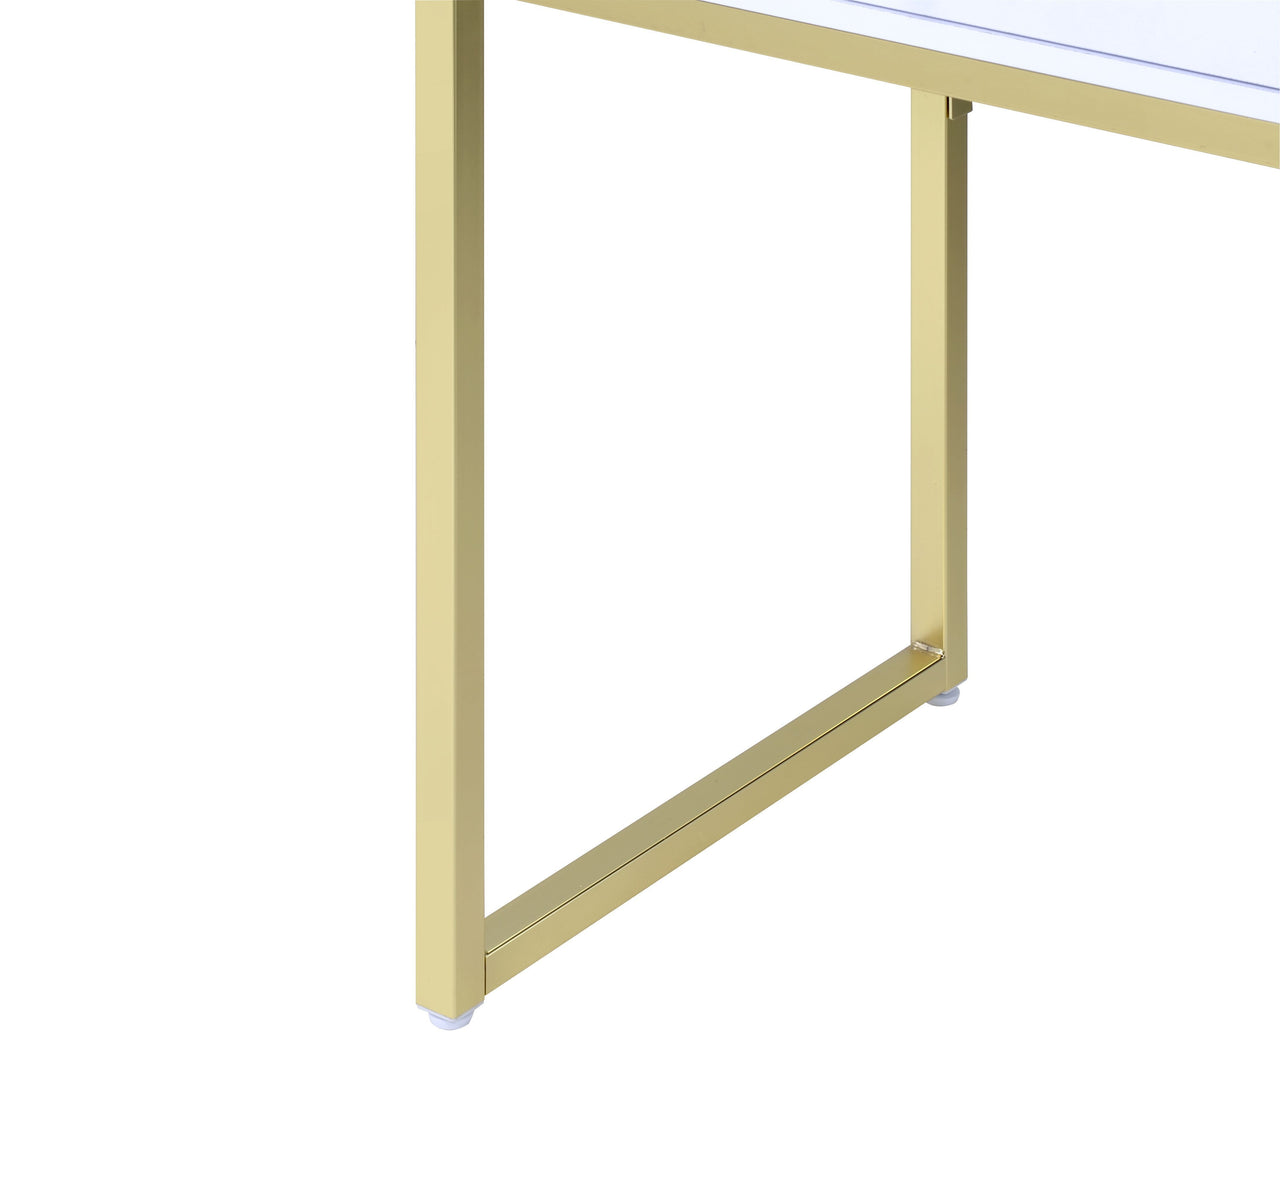 Coleen - Vanity Desk - White & Brass Finish - Tony's Home Furnishings